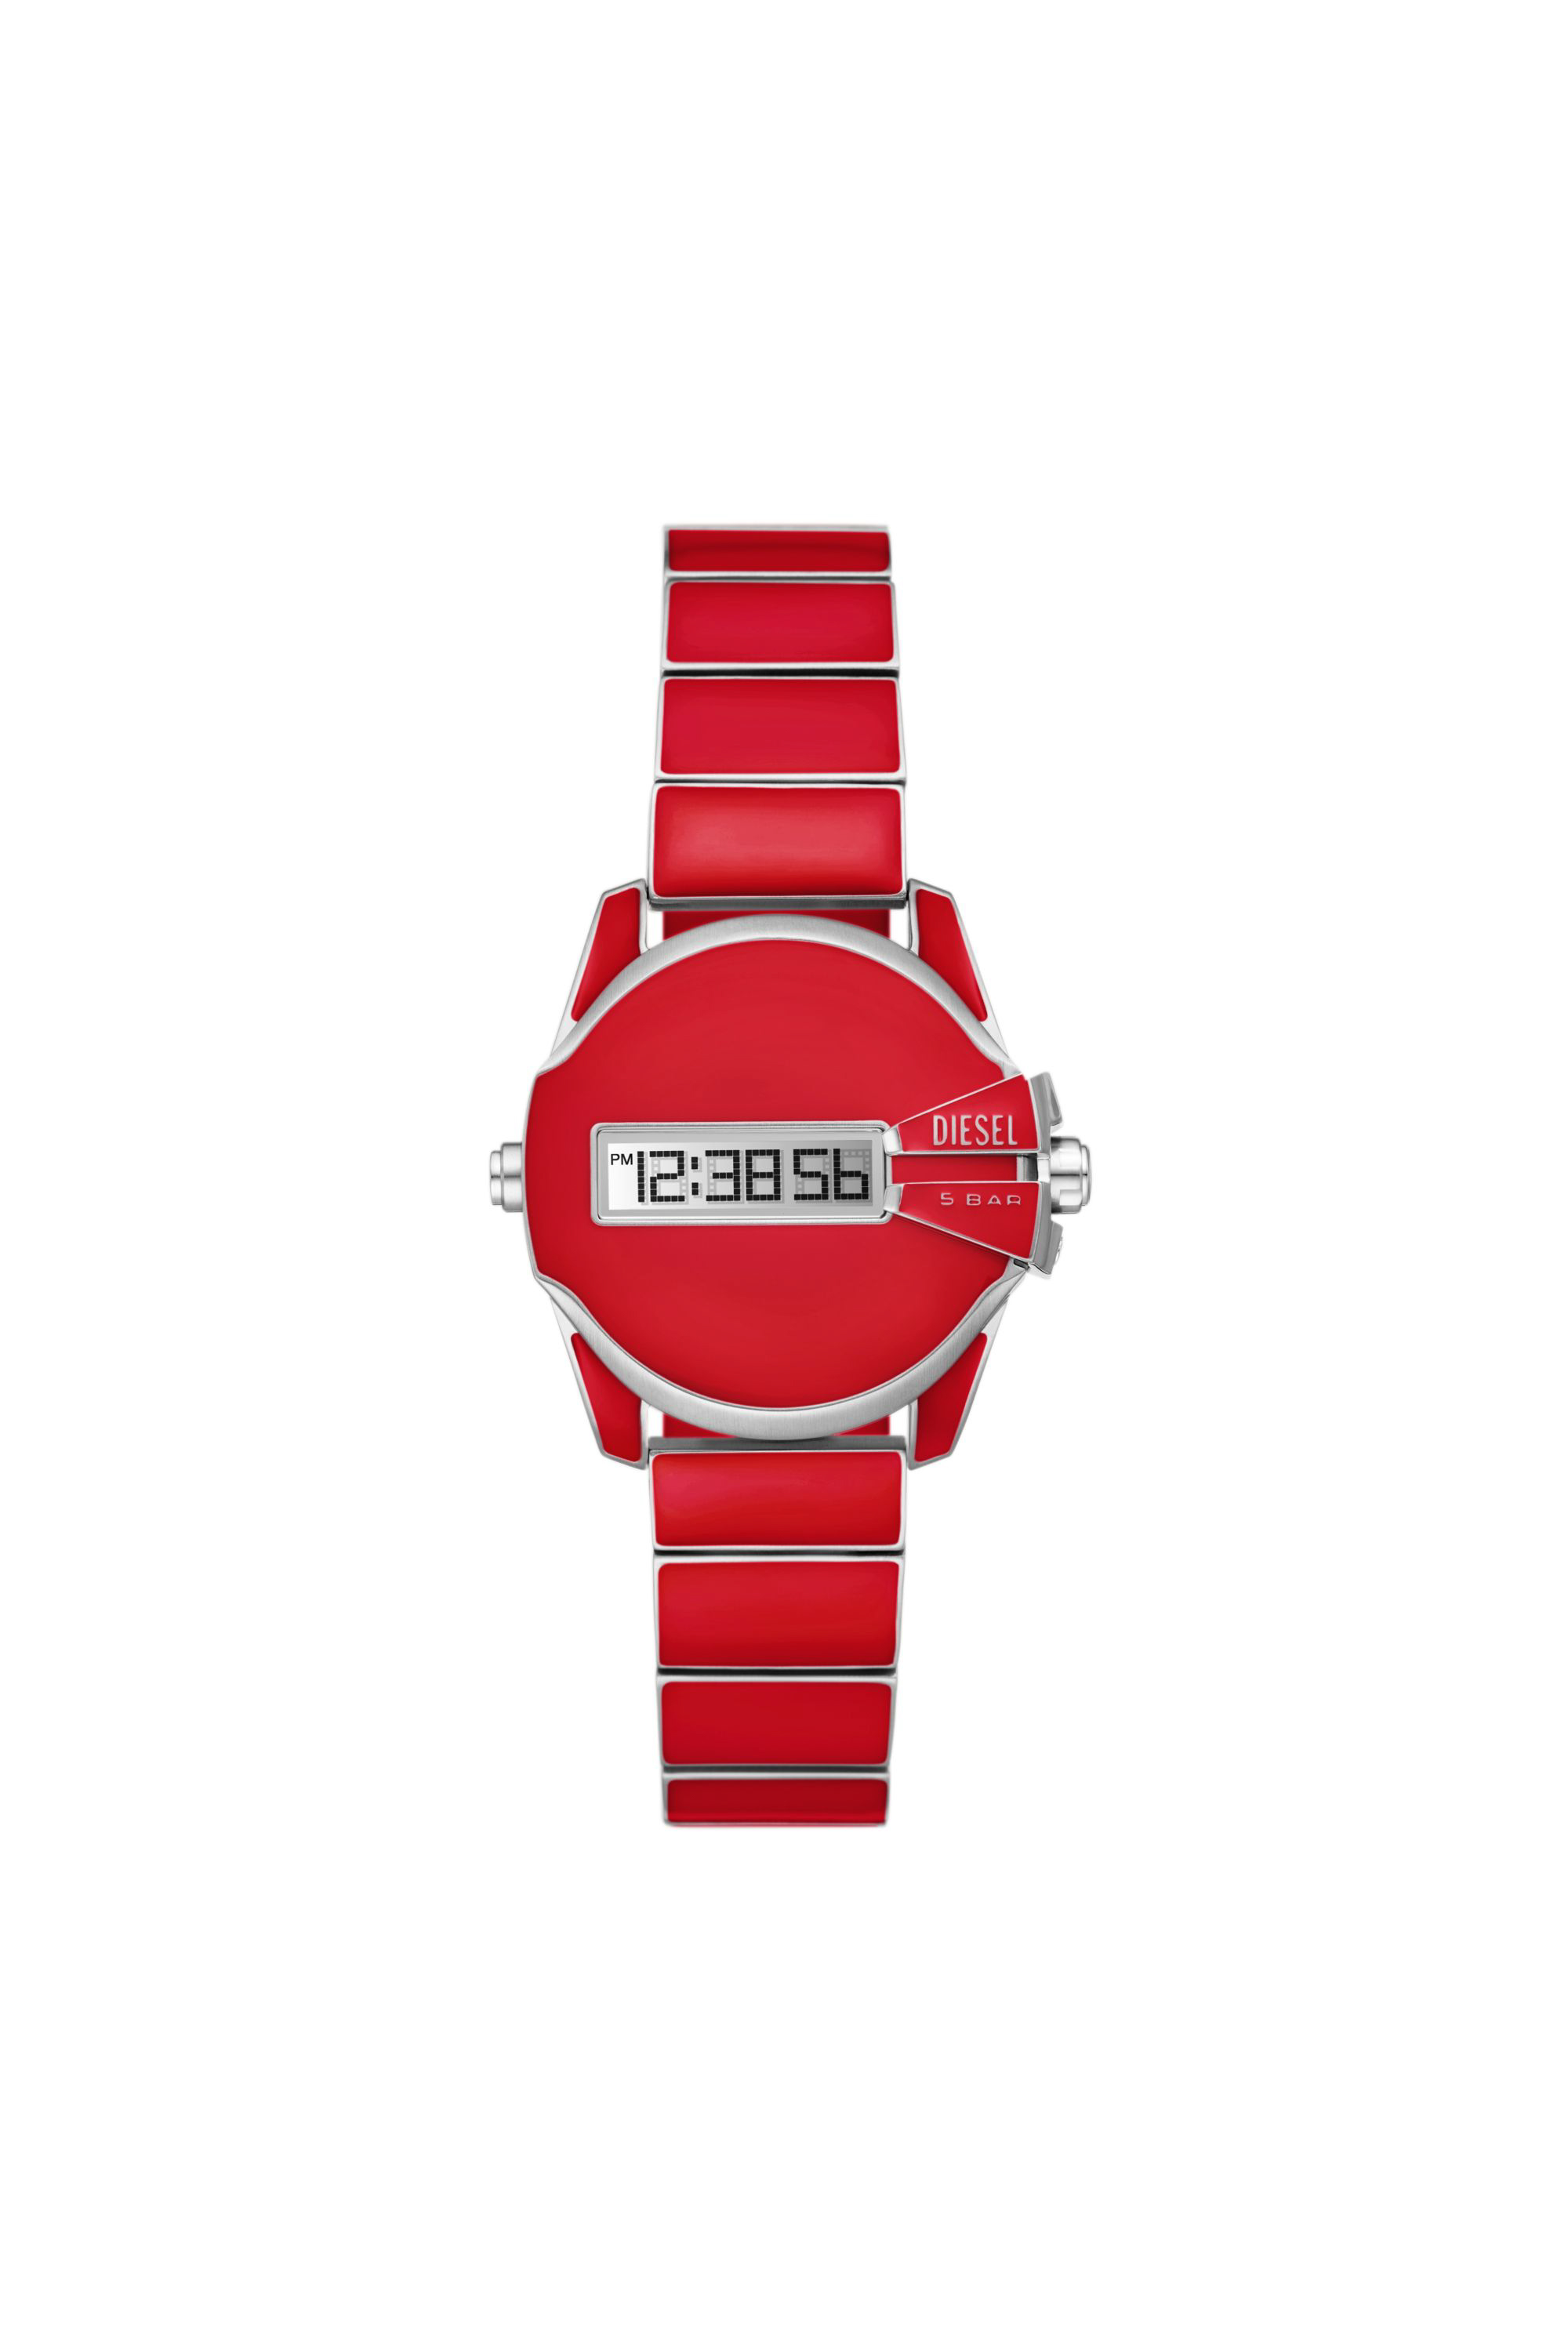 Diesel - Baby Chief Digital red enamel and stainless steel watch - Timeframes - Unisex - Red